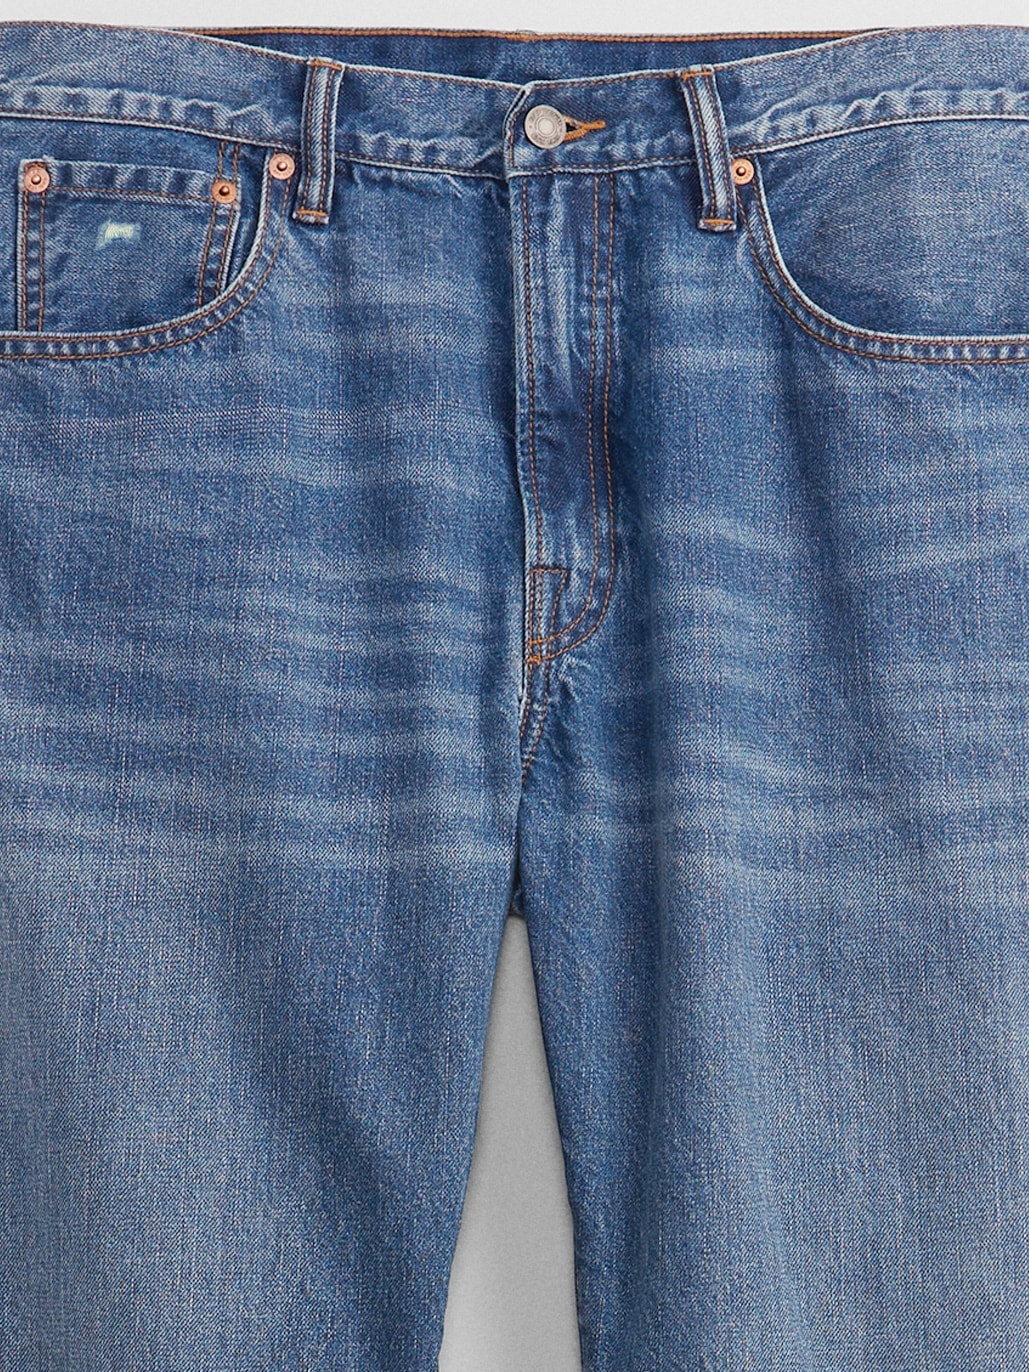 90s Original Straight Jeans | Gap Factory